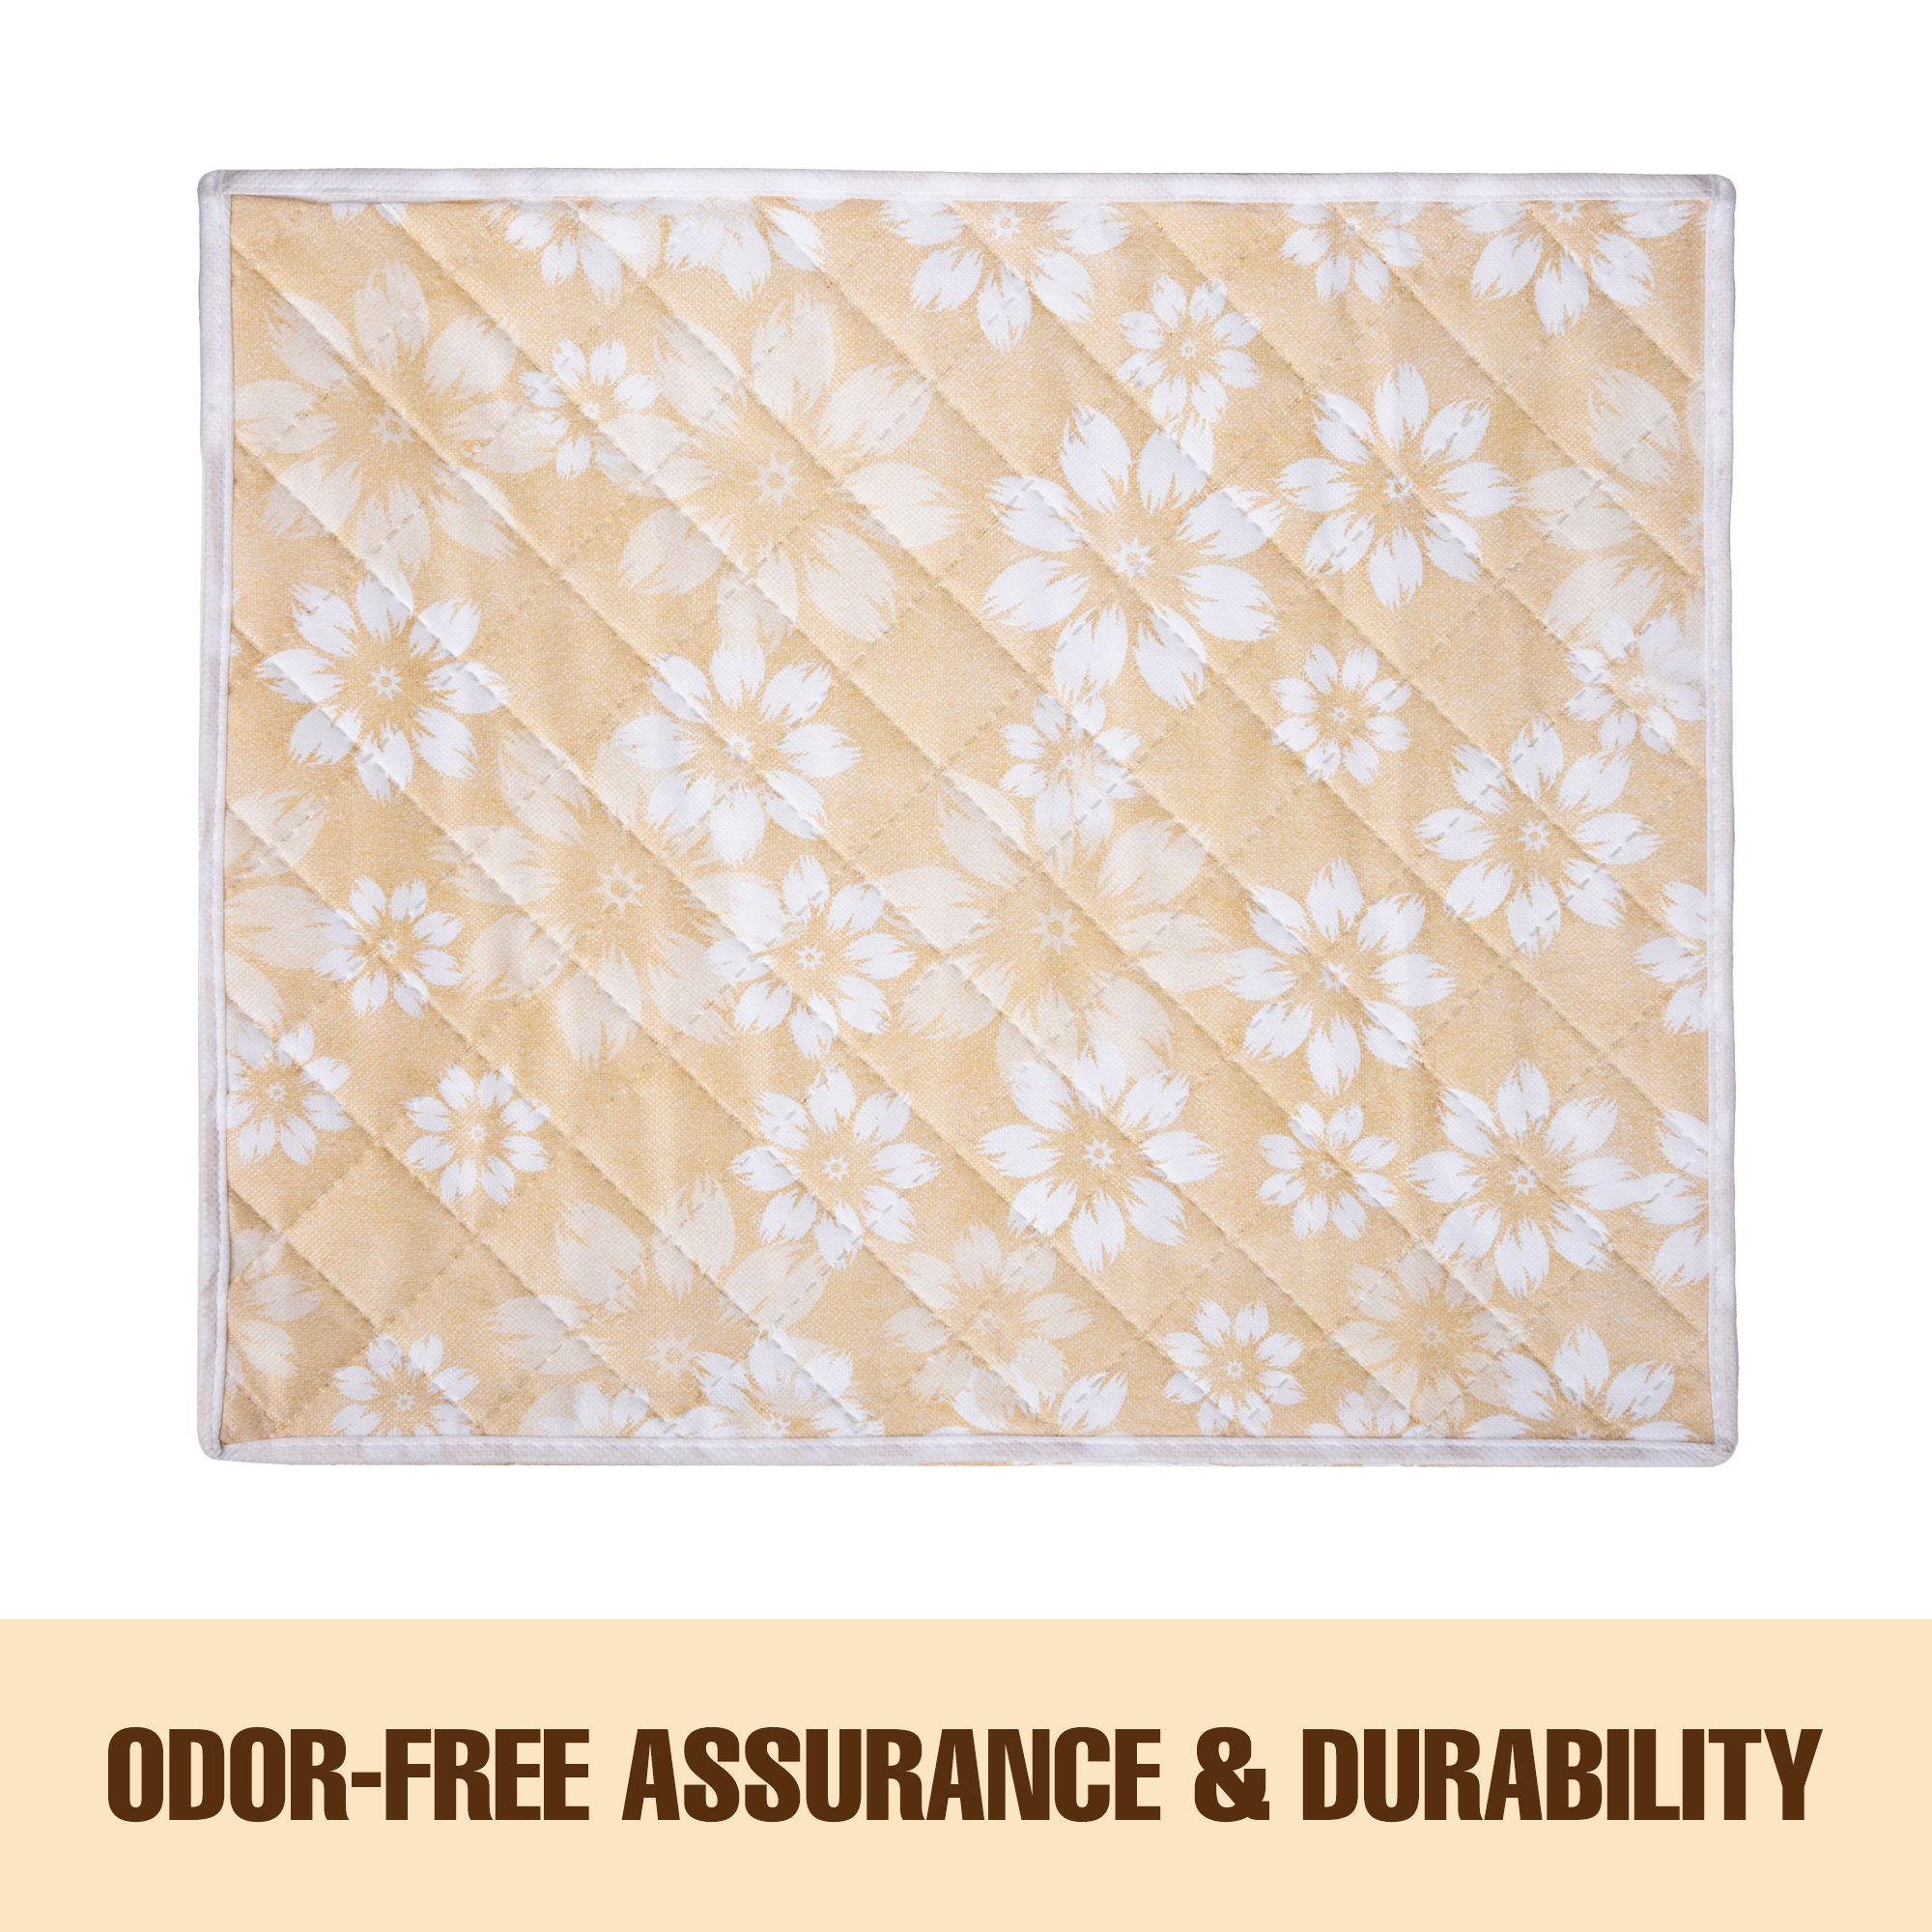 Kuber Industries Saree Cover & Blanket Cover Set |Underbed Storage Bag Combo Set | Visible Window & Handle Storage Bag | Flower Quilted |Golden